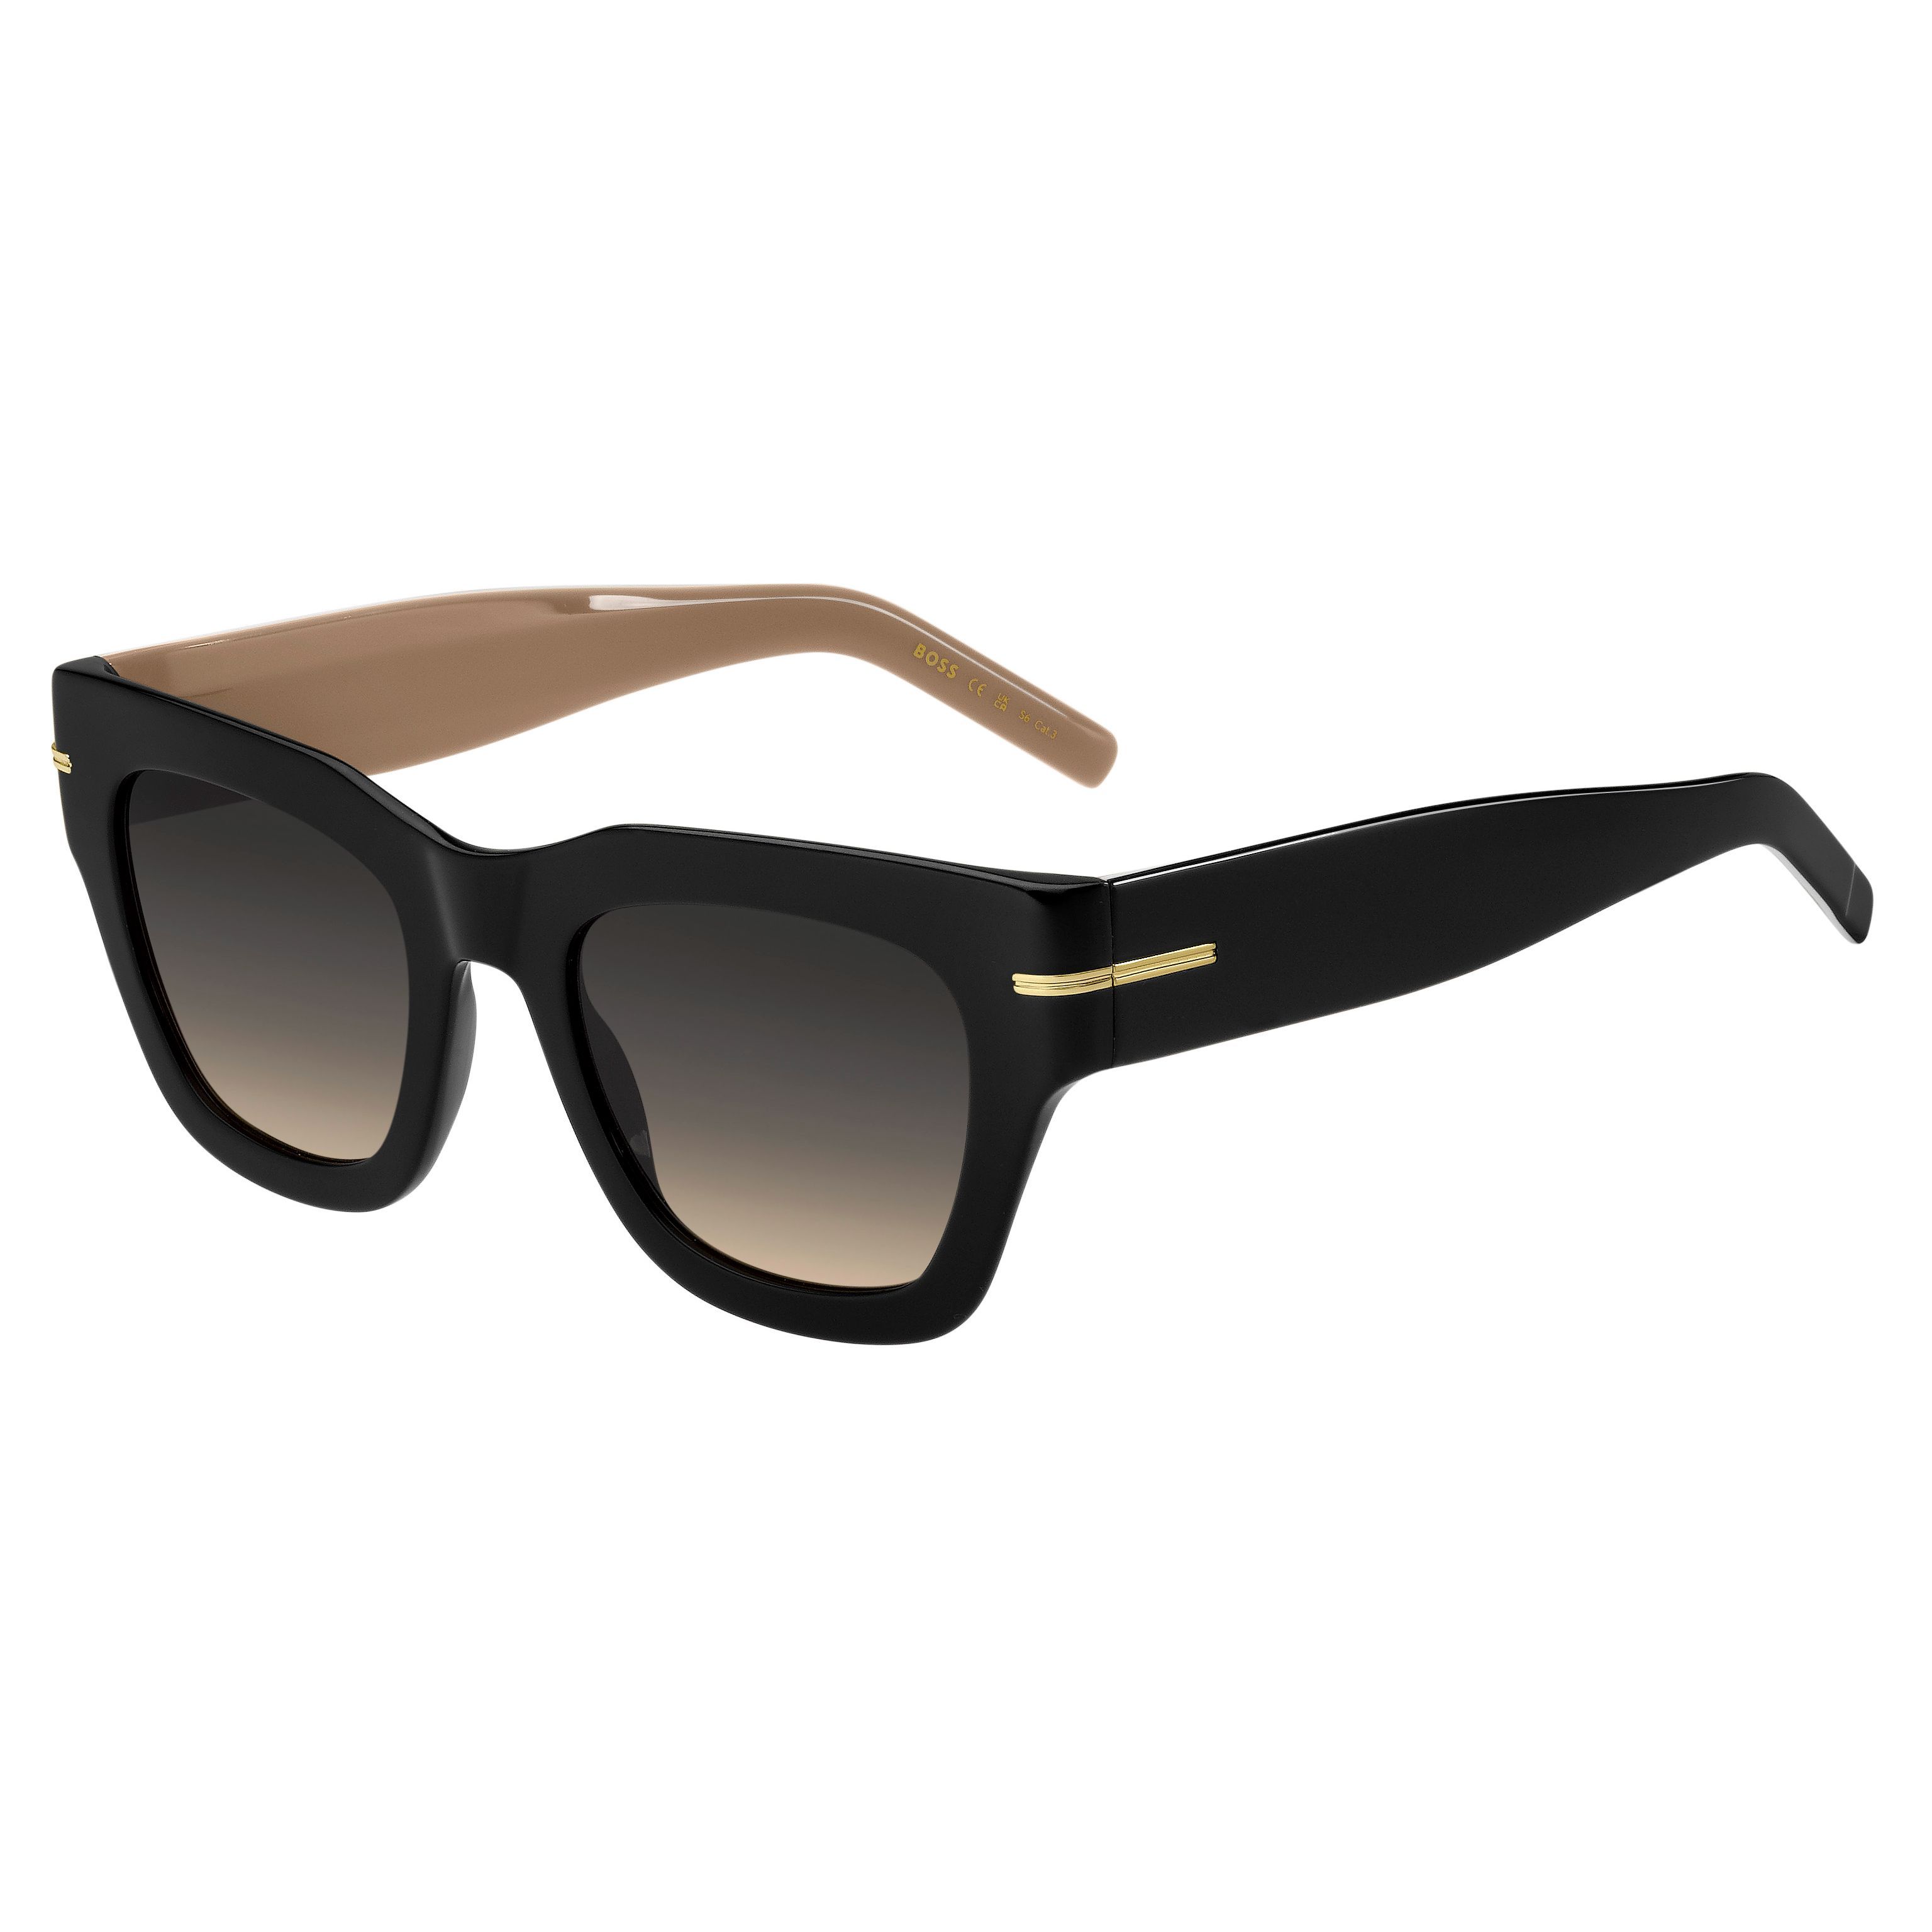 BOSS 1520 N S Square Sunglasses 0WM PR - size 51